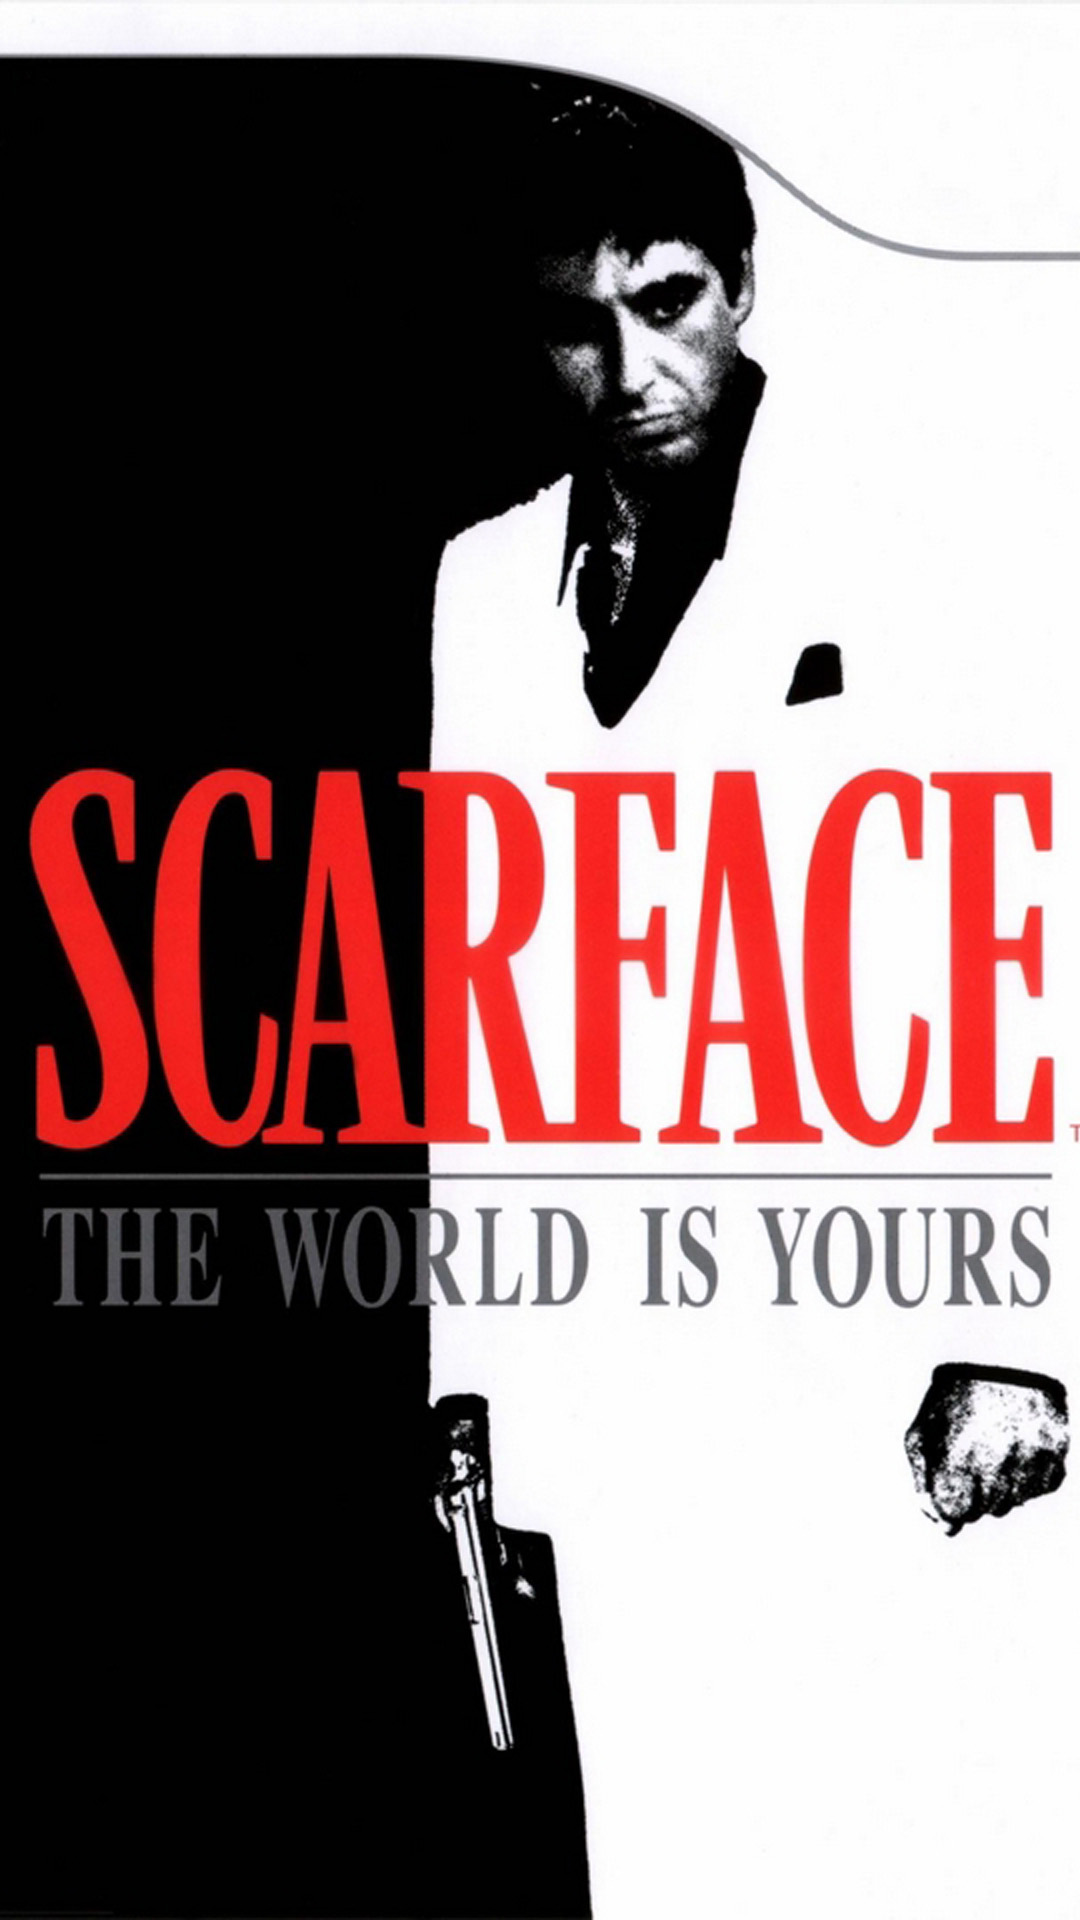 [74+] Scarface Wallpaper Hd on WallpaperSafari